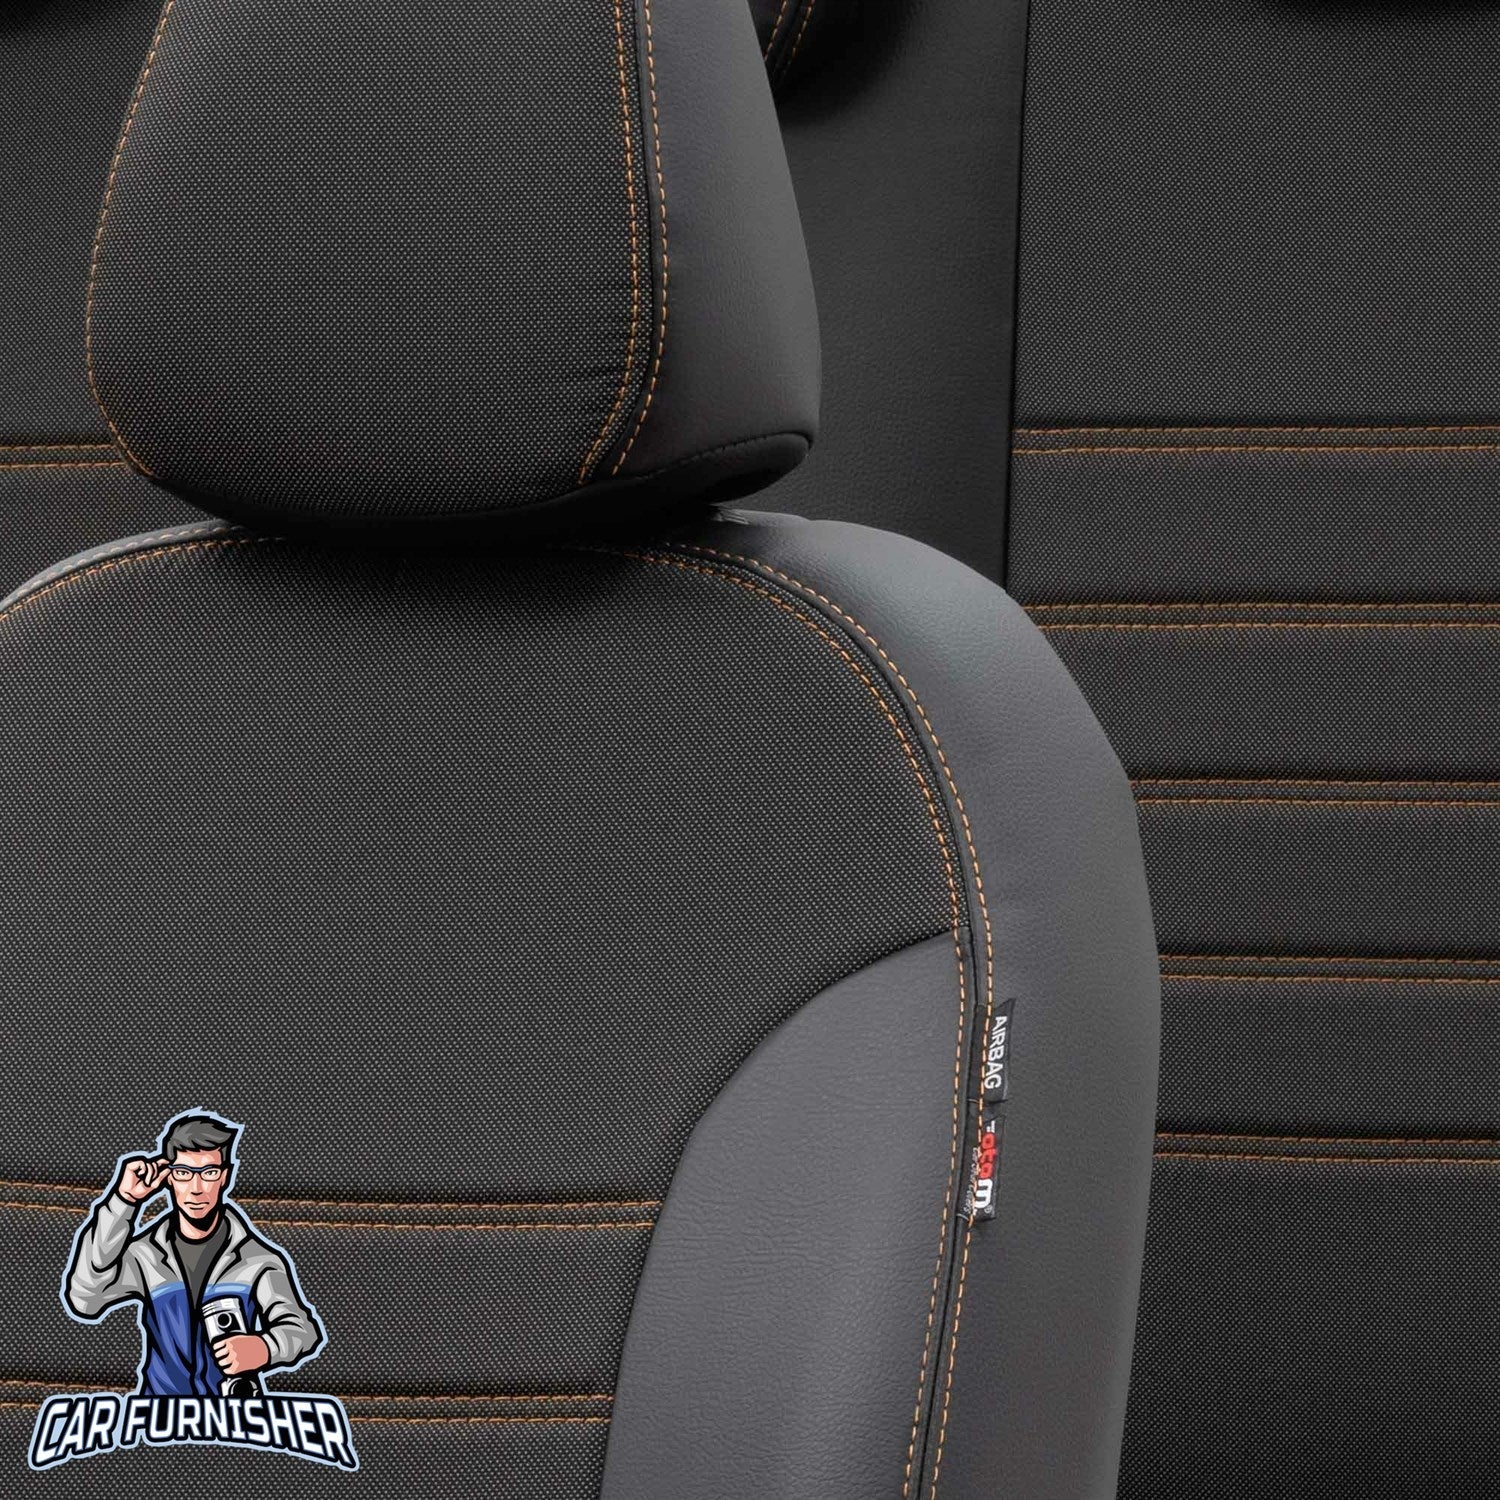 Mini Cooper Seat Covers Paris Leather & Jacquard Design Dark Beige Leather & Jacquard Fabric